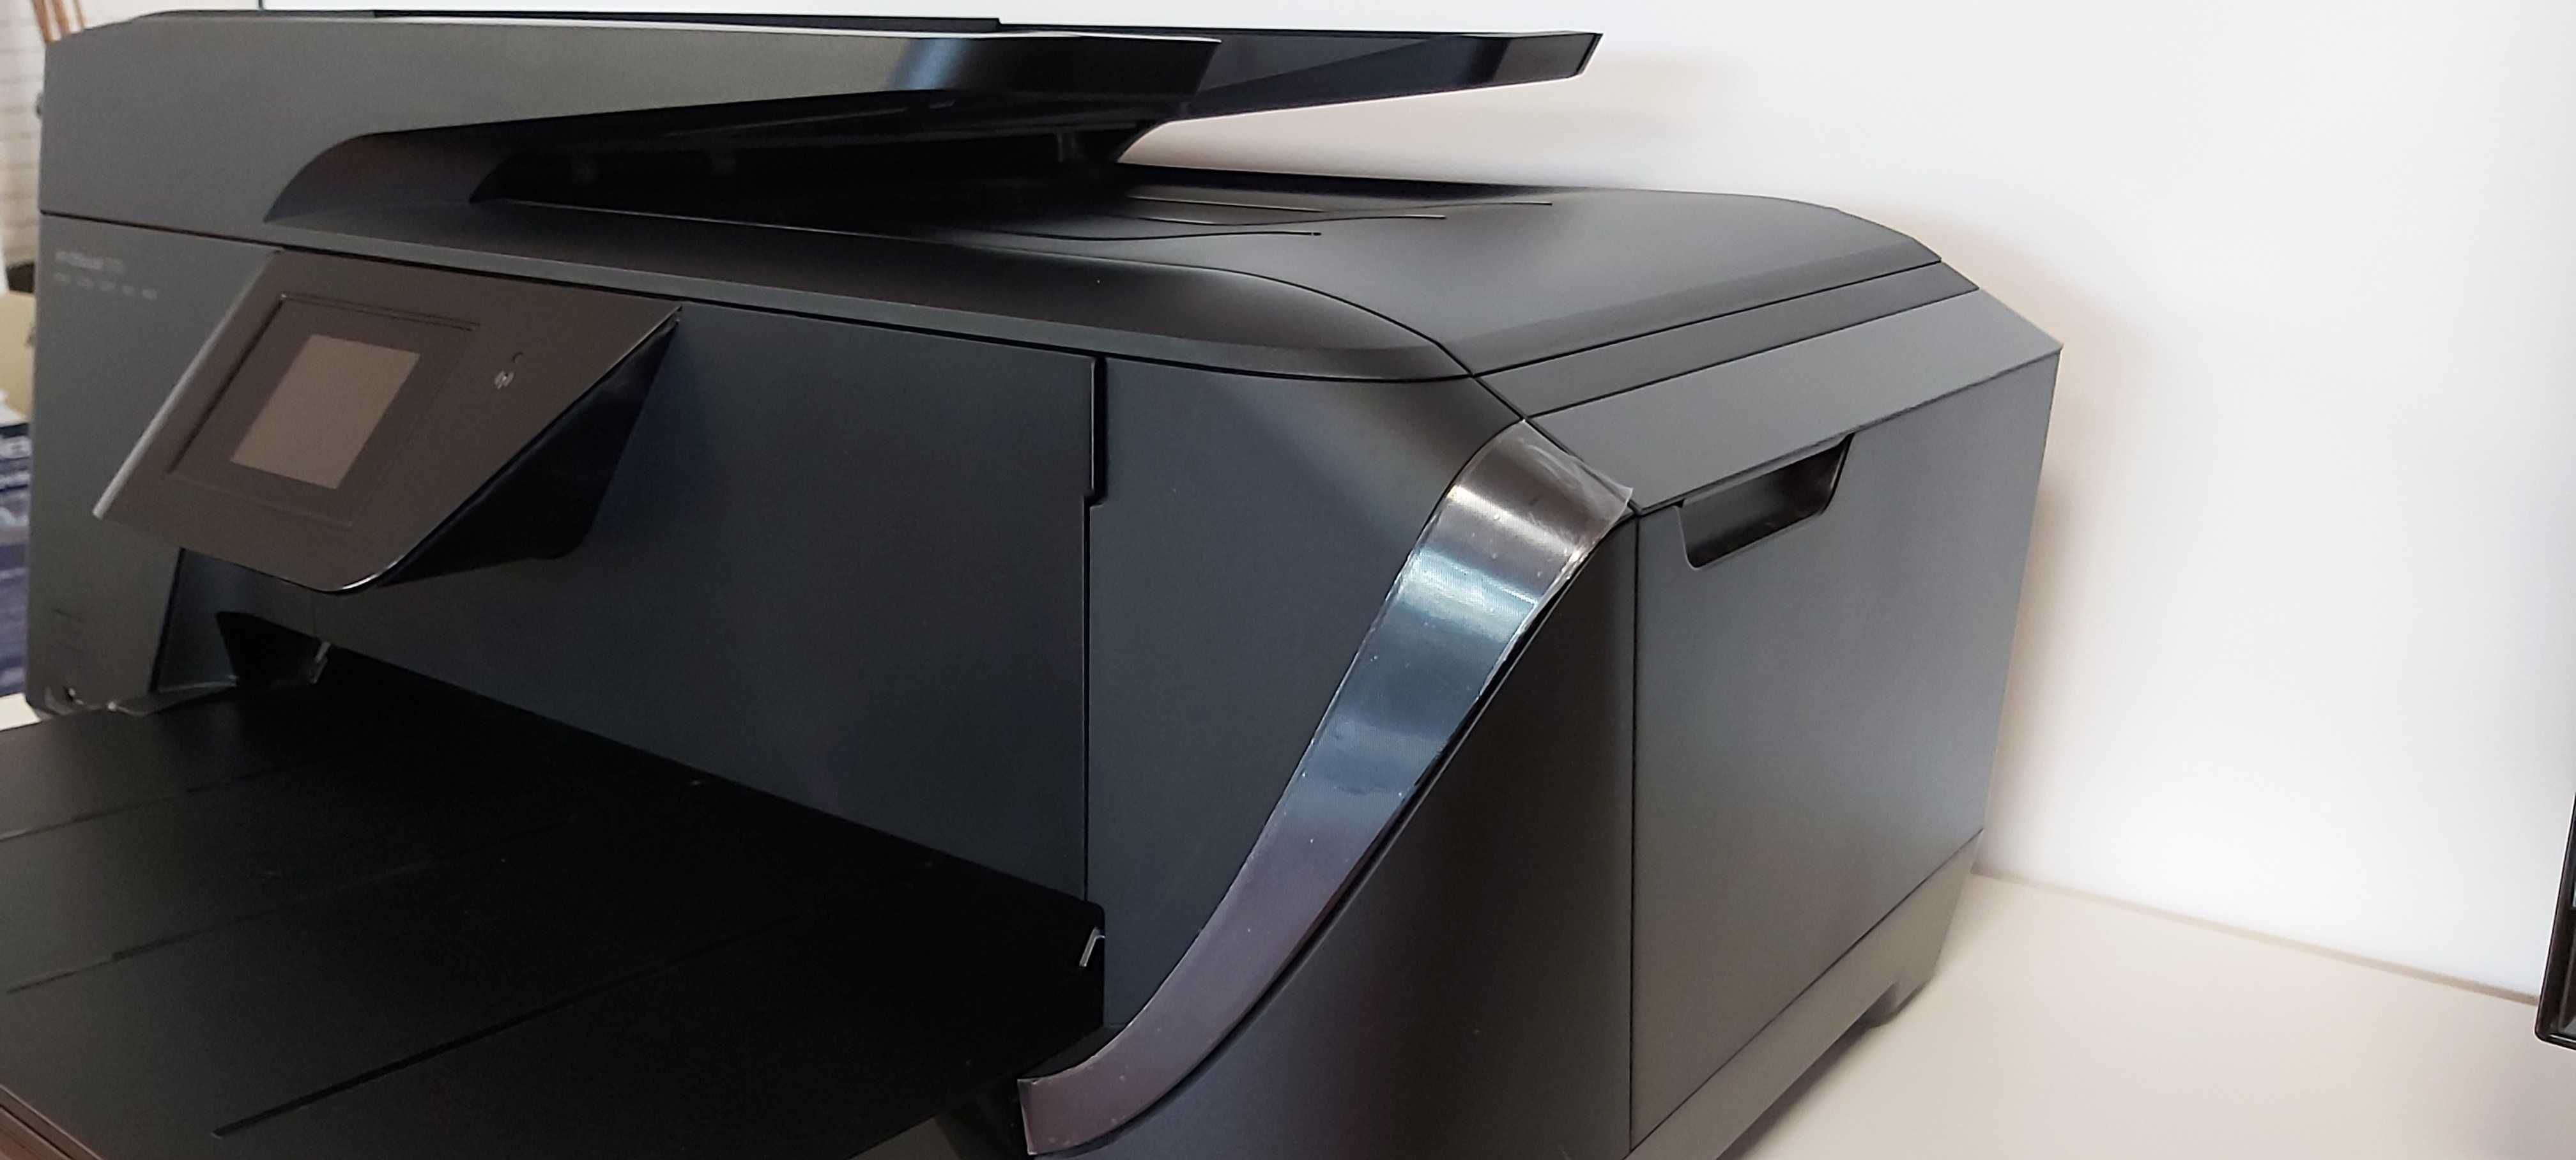 Impressora HP OfficeJet 7510 - Semi nova